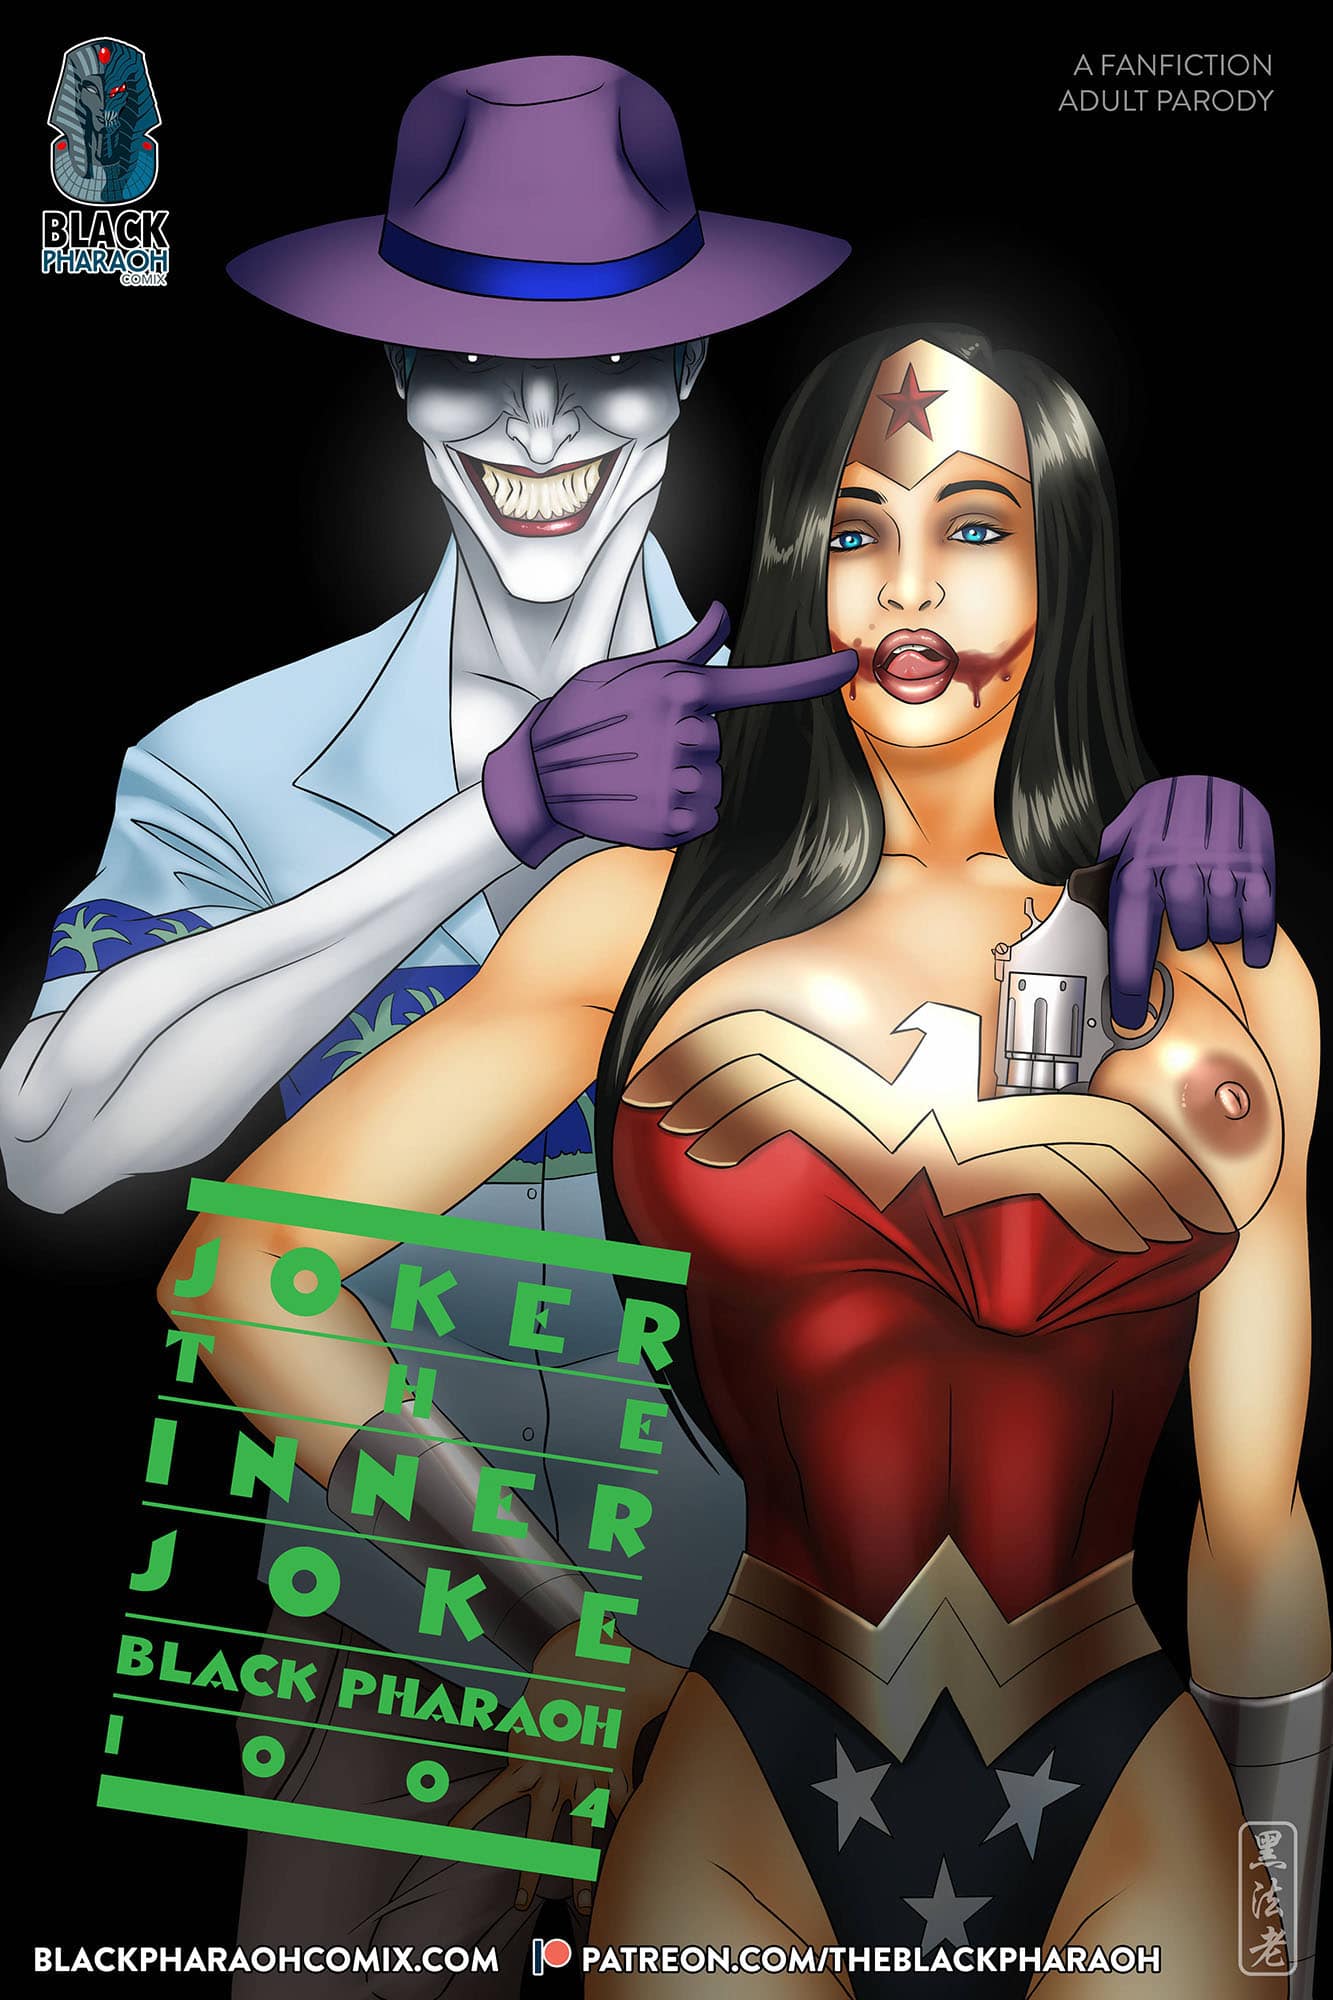 Sexy Wonder Woman Comic Book - The Inner Joke [Black Pharaoh] - FreeAdultComix